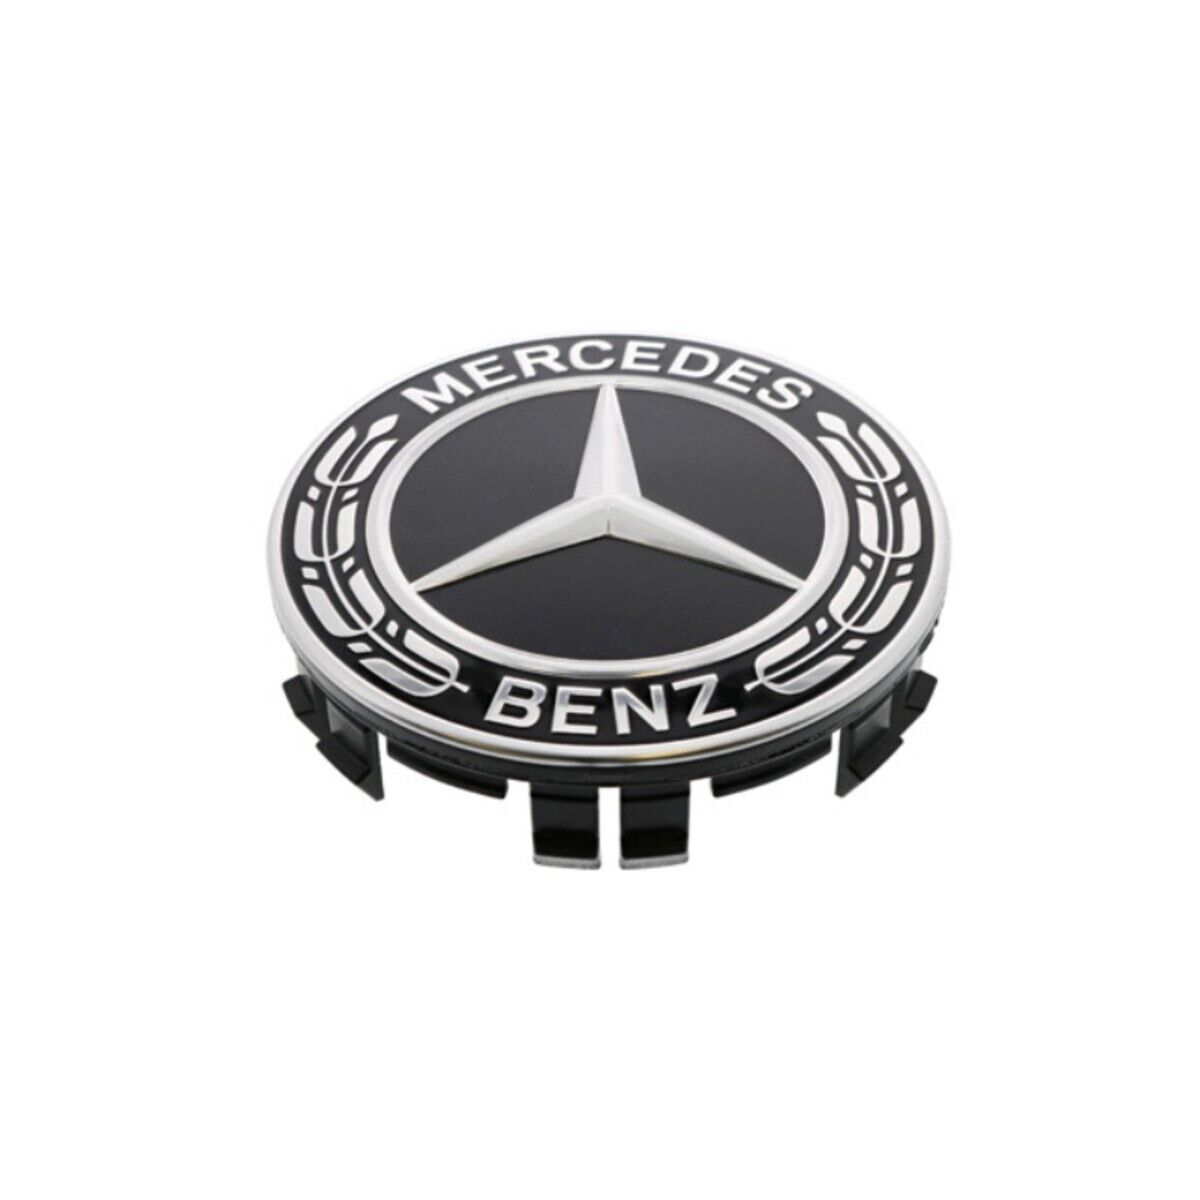 222-400-22-00 9040 GenuineXL Wheel Center Cap for Mercedes C Class E ML Van S